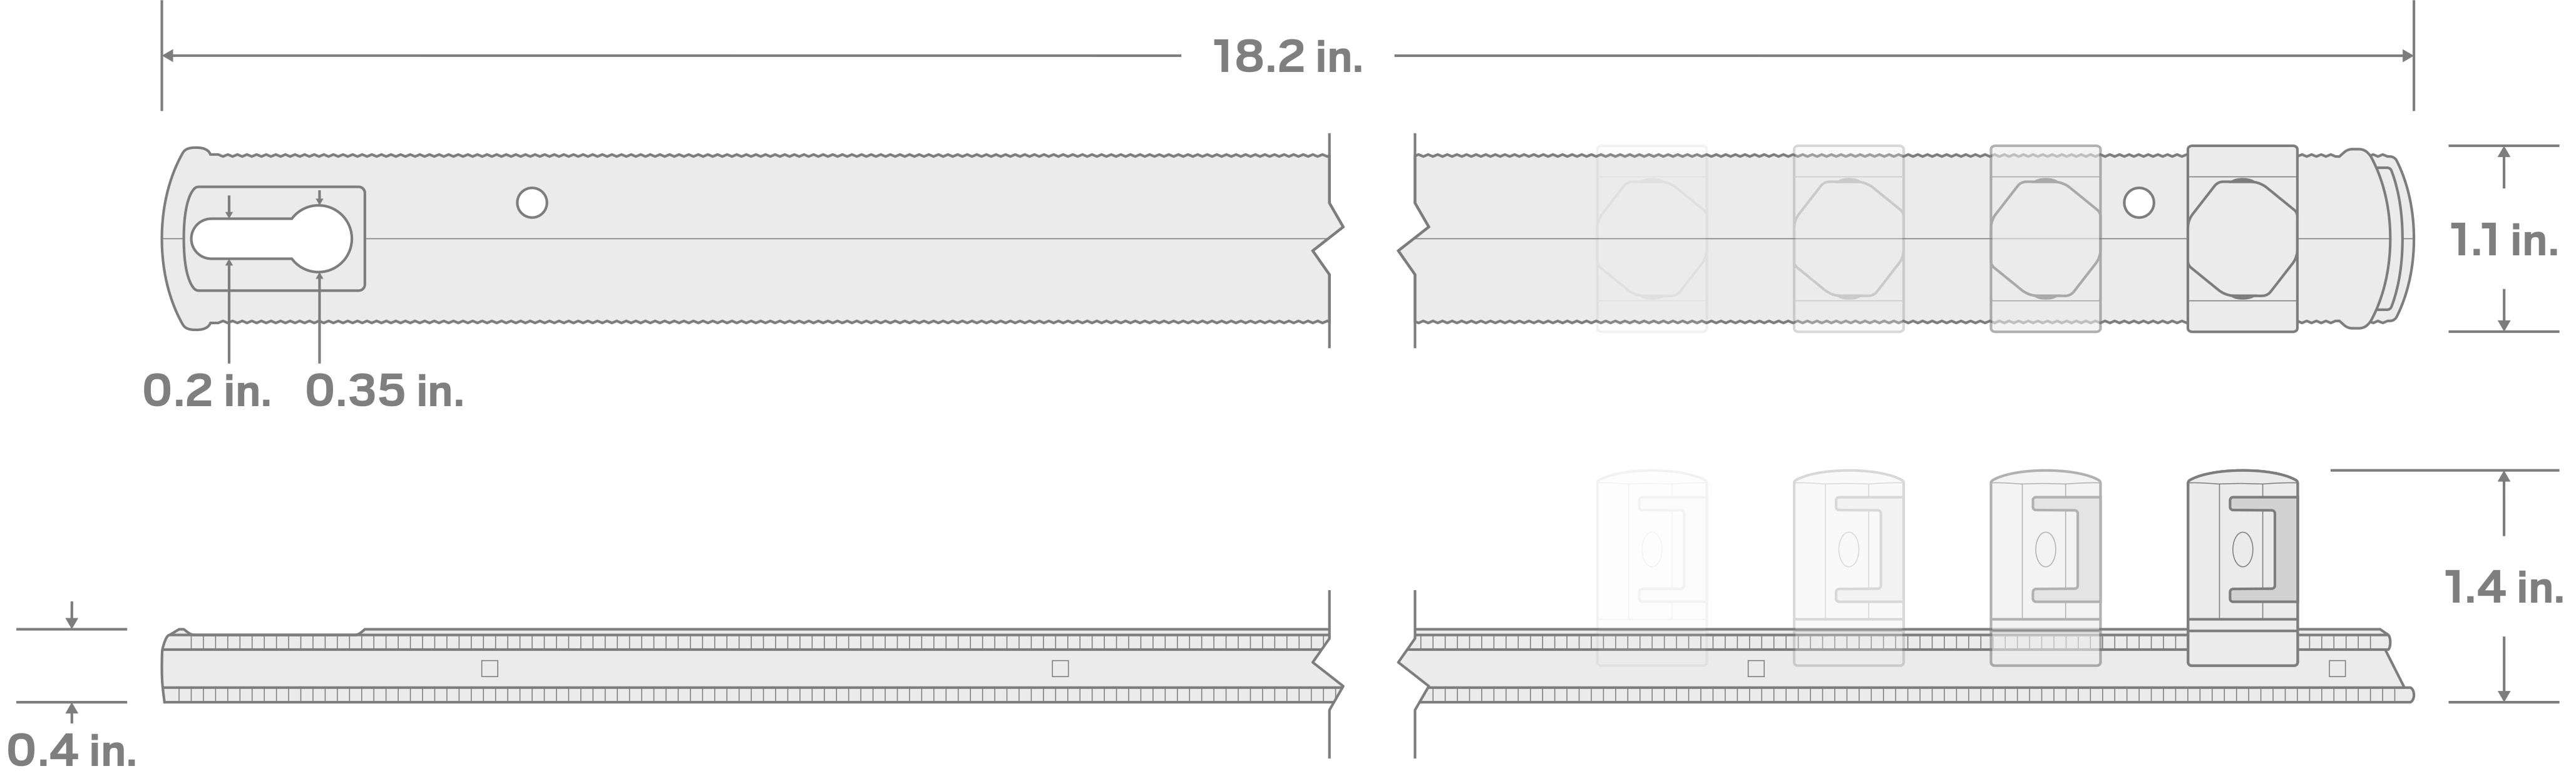 Specs for 3/4 Inch Drive x 18 Inch Socket Rail, 10 Clips (Black)